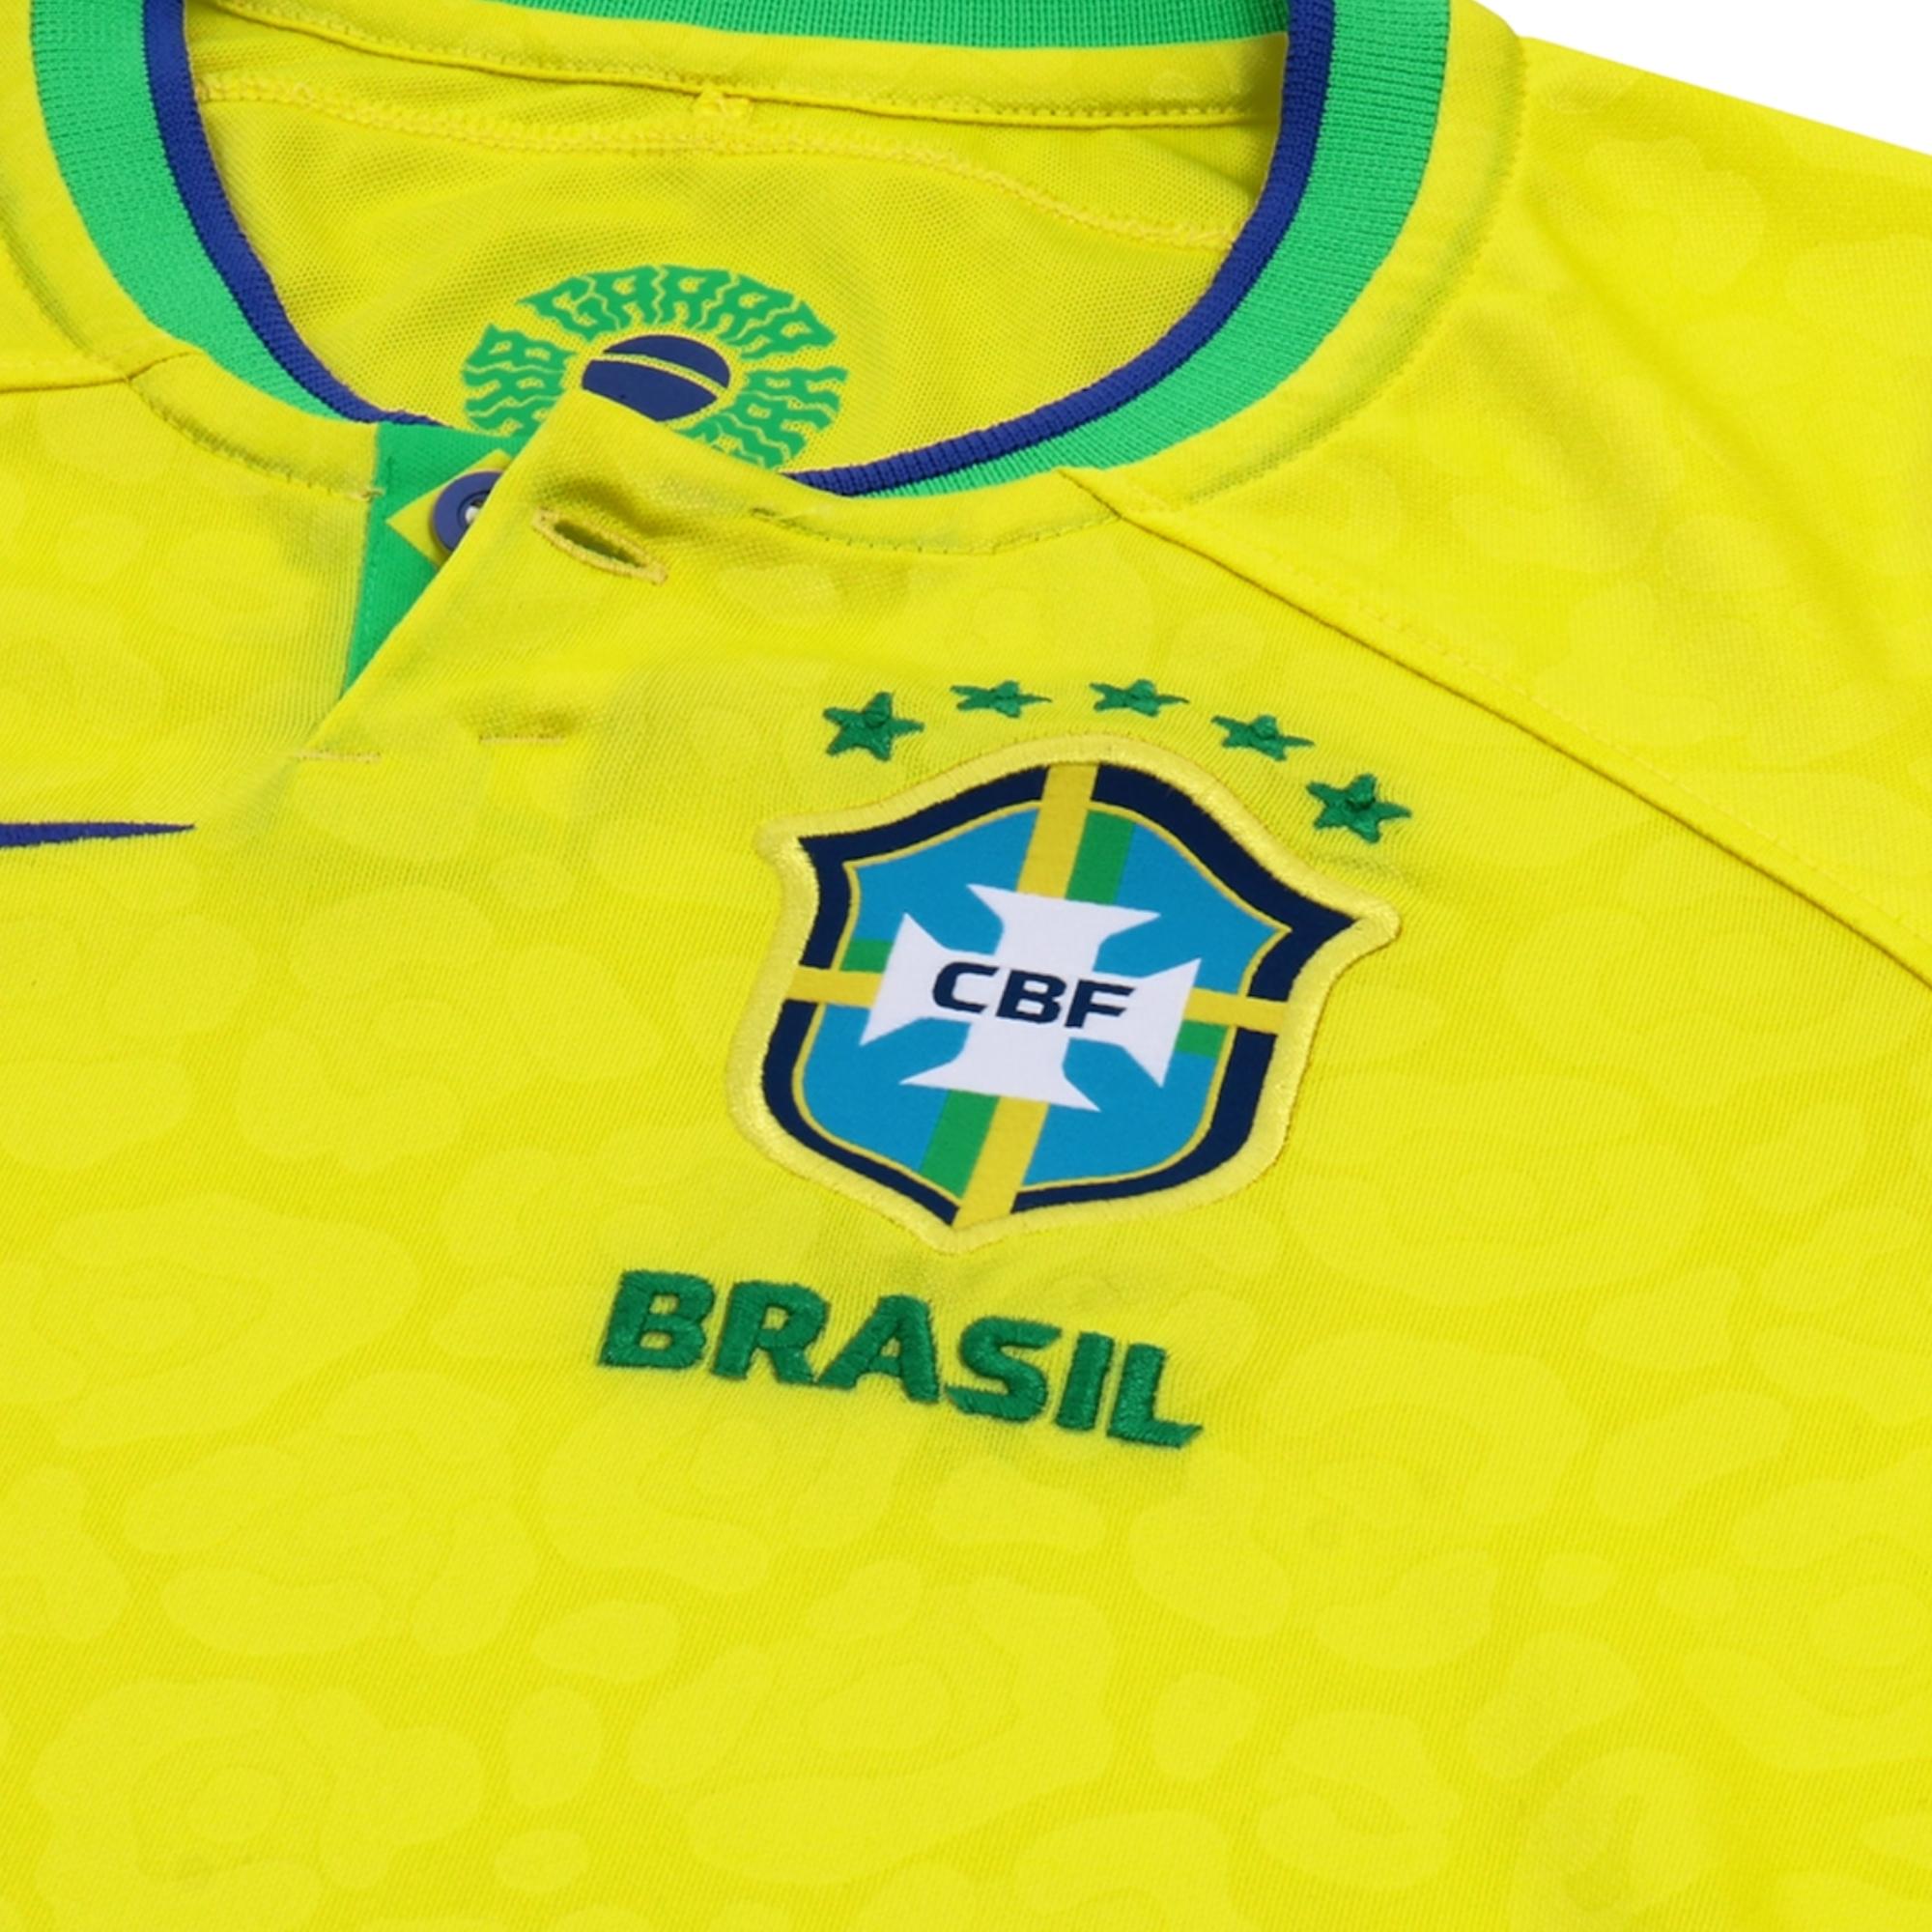 Camiseta Nike Brasil 22 Escudo Infantil DH7765-740 - Ativa Esportes